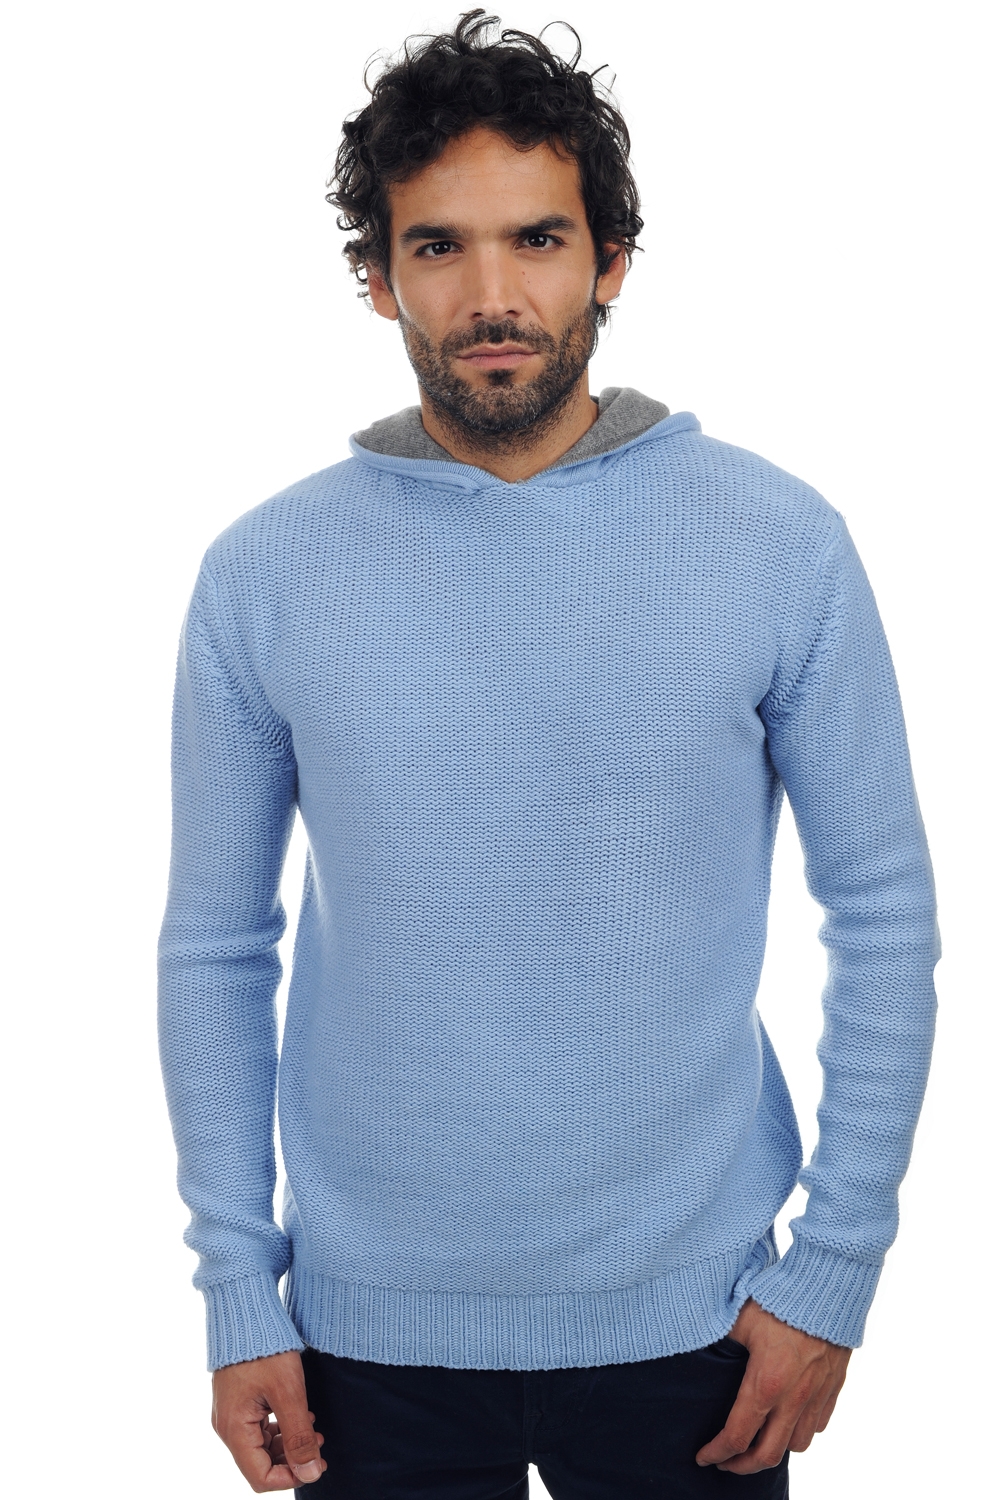 Yak men chunky sweater conor sky blue grey marl m